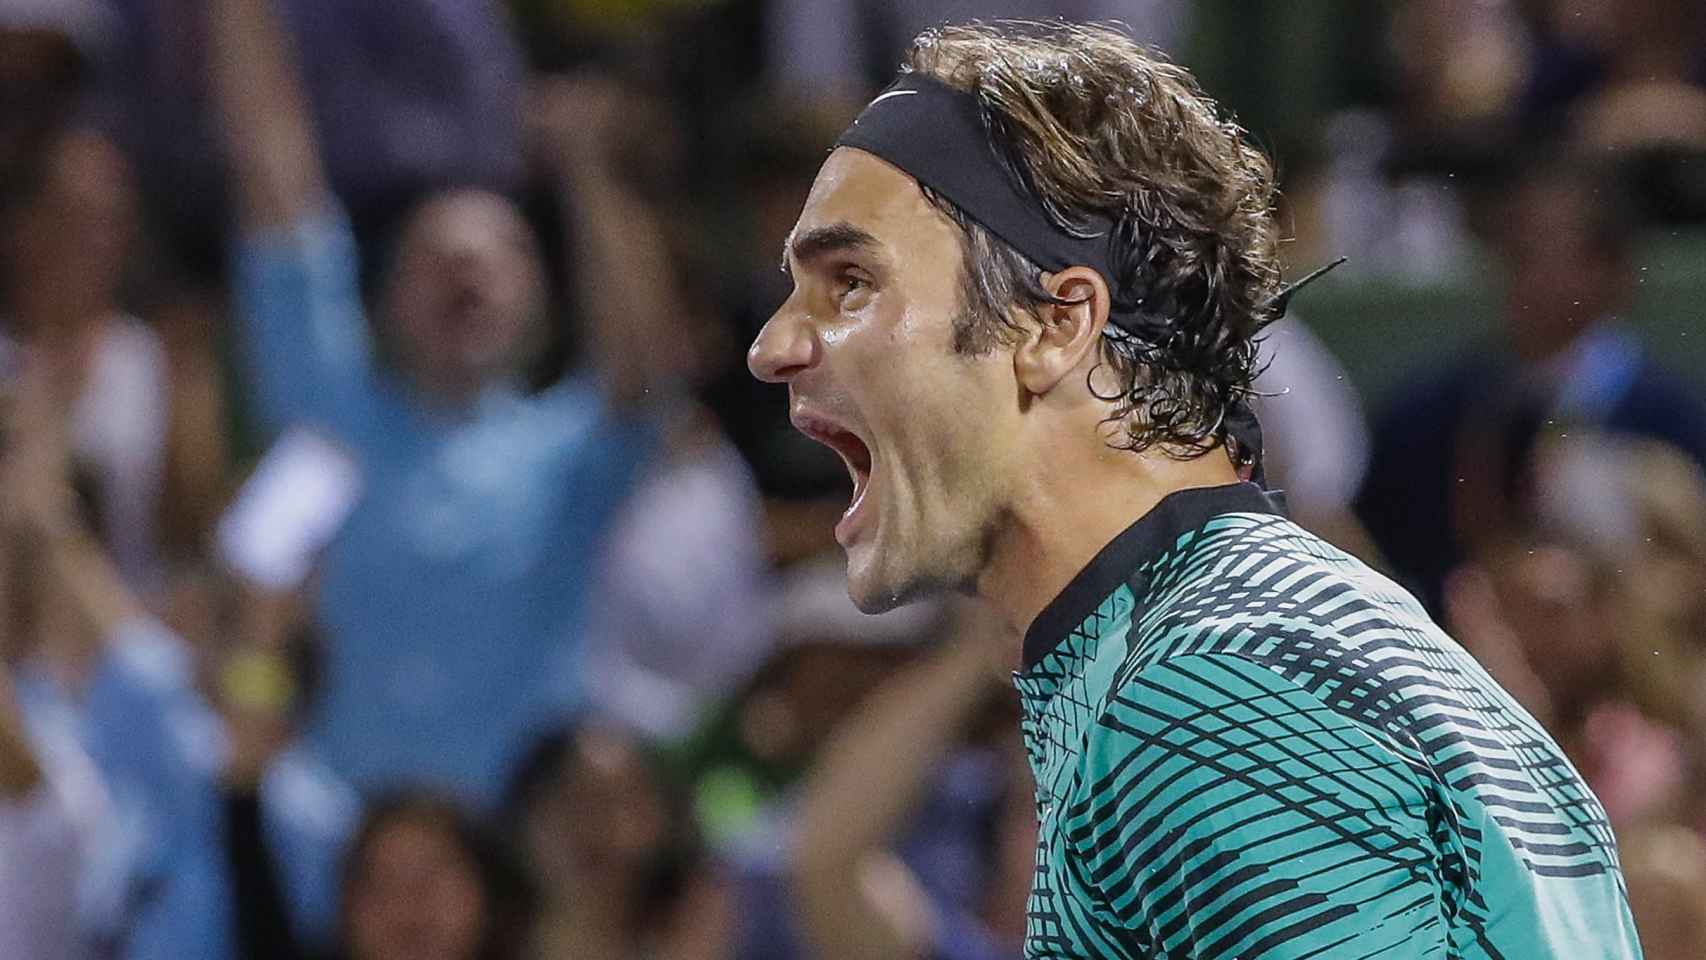 Federer, celebrando su pase a la final del torneo de Miami